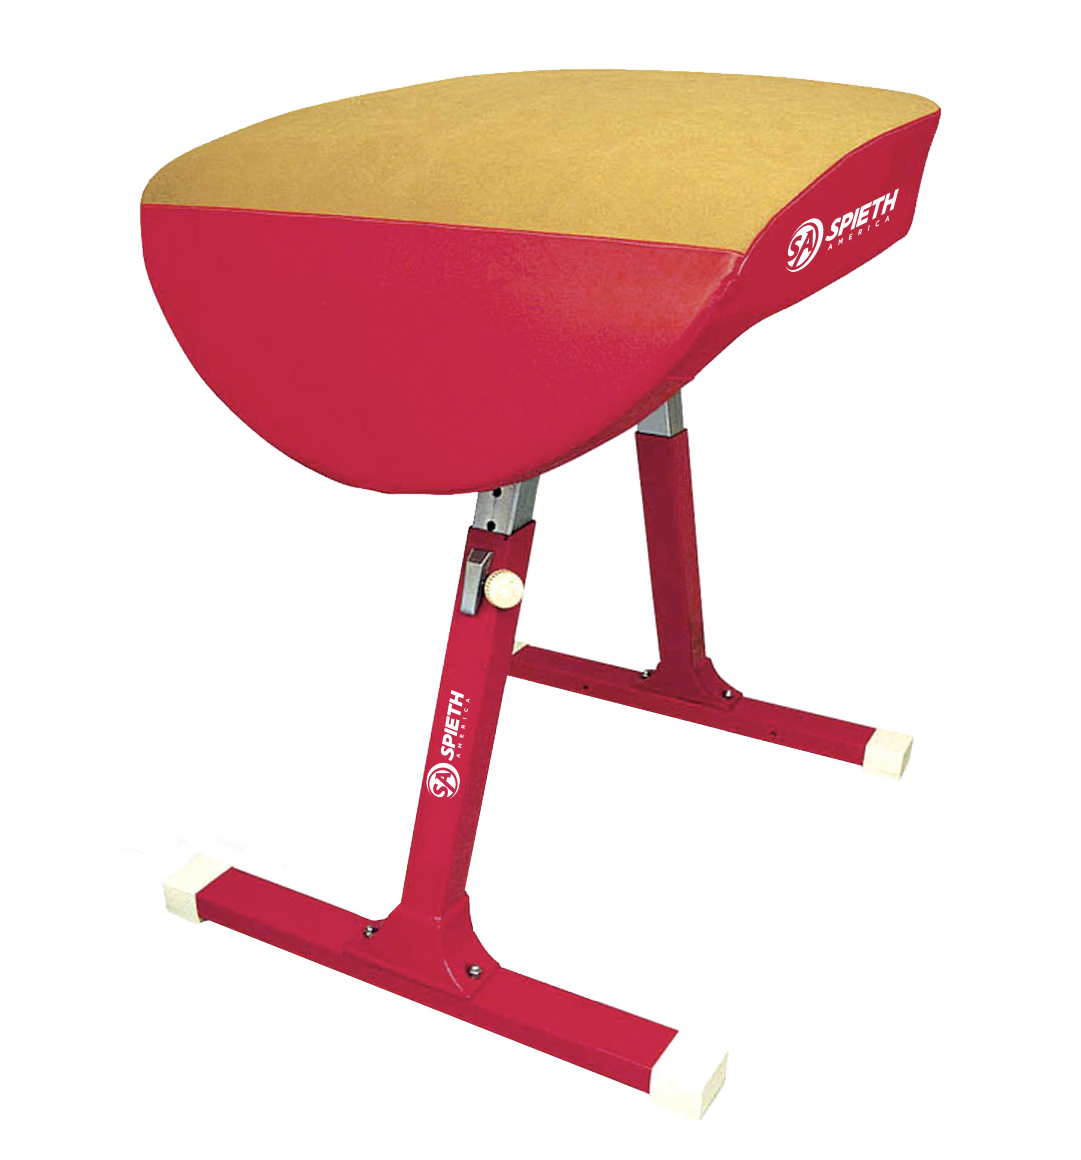 Recreational standard vaulting table. Gymnastics clipart gymnastics vault